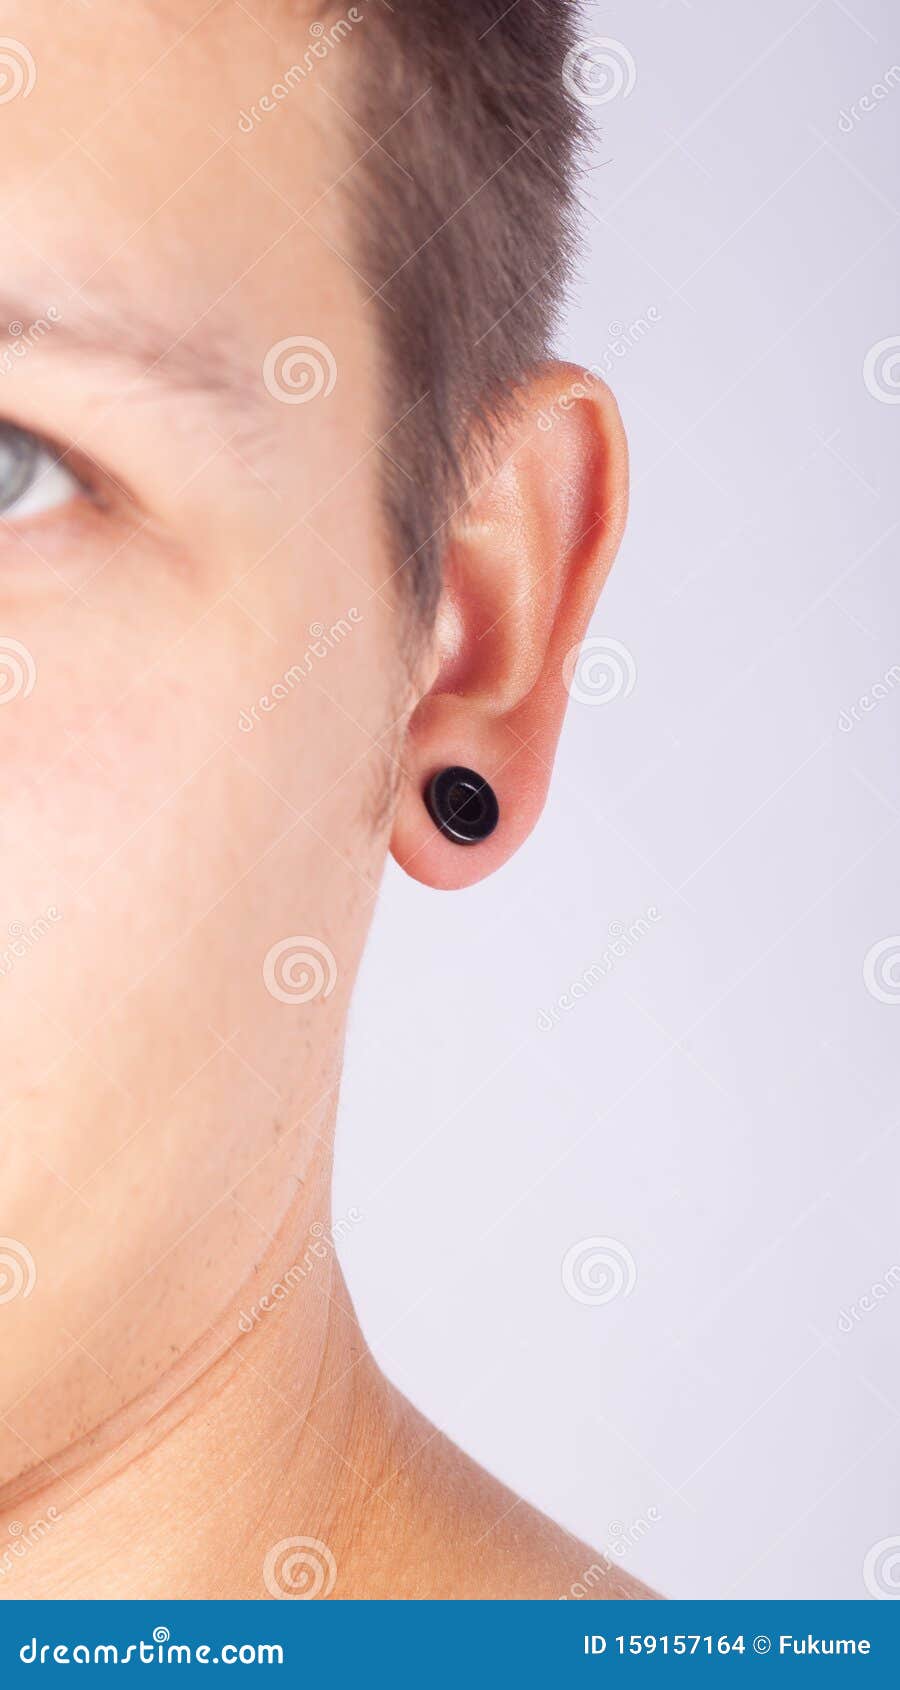 What ear do guys pierce